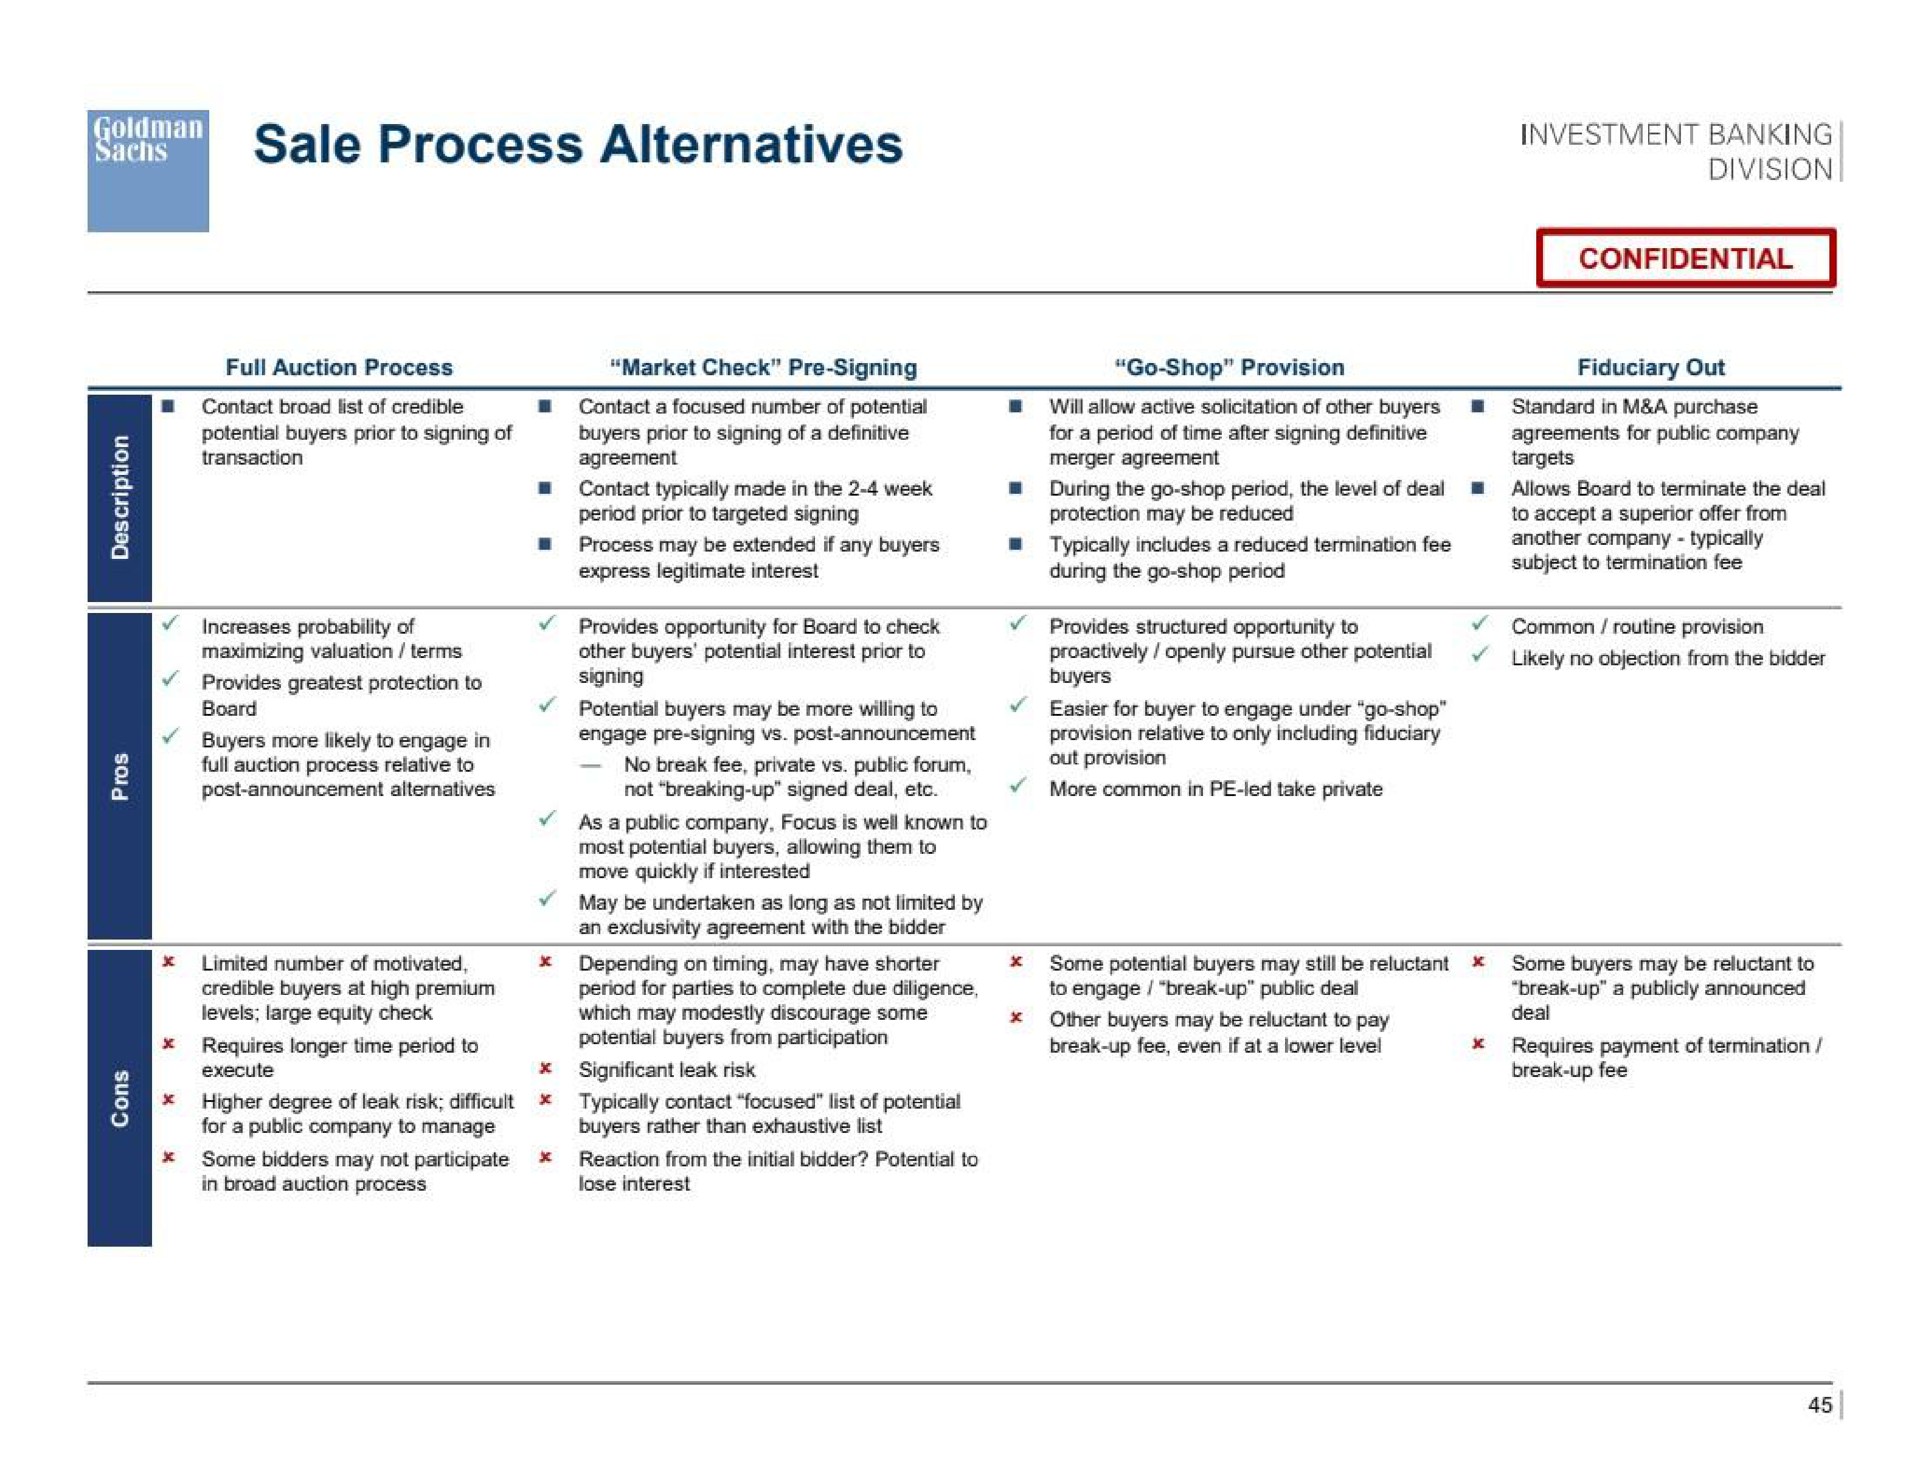 sale process alternatives baning | Goldman Sachs